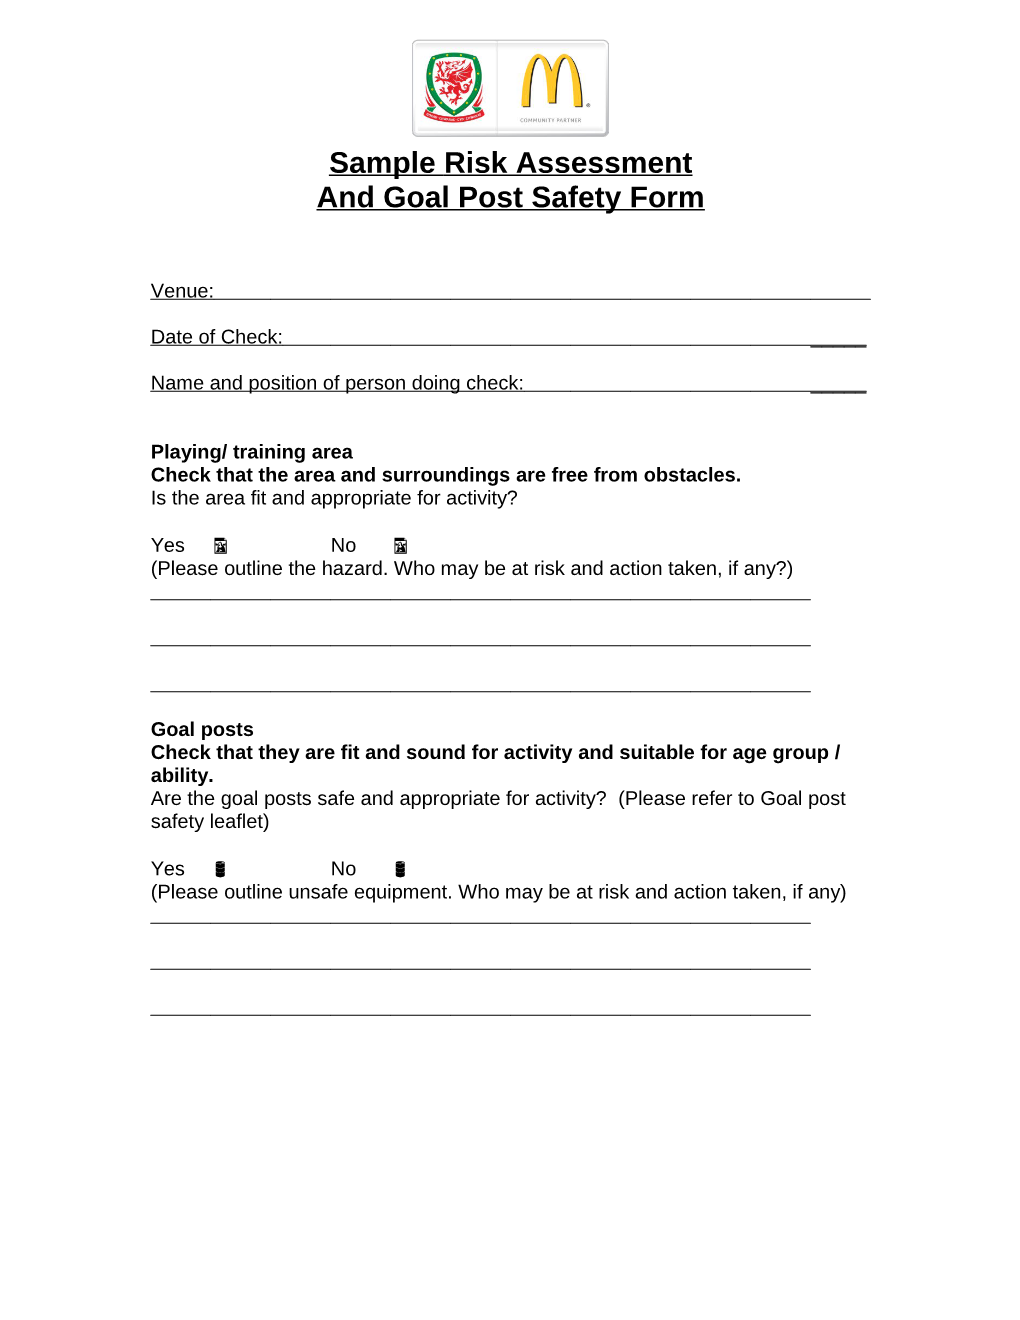 Sample Risk Assessment / Goal Post Safety Form